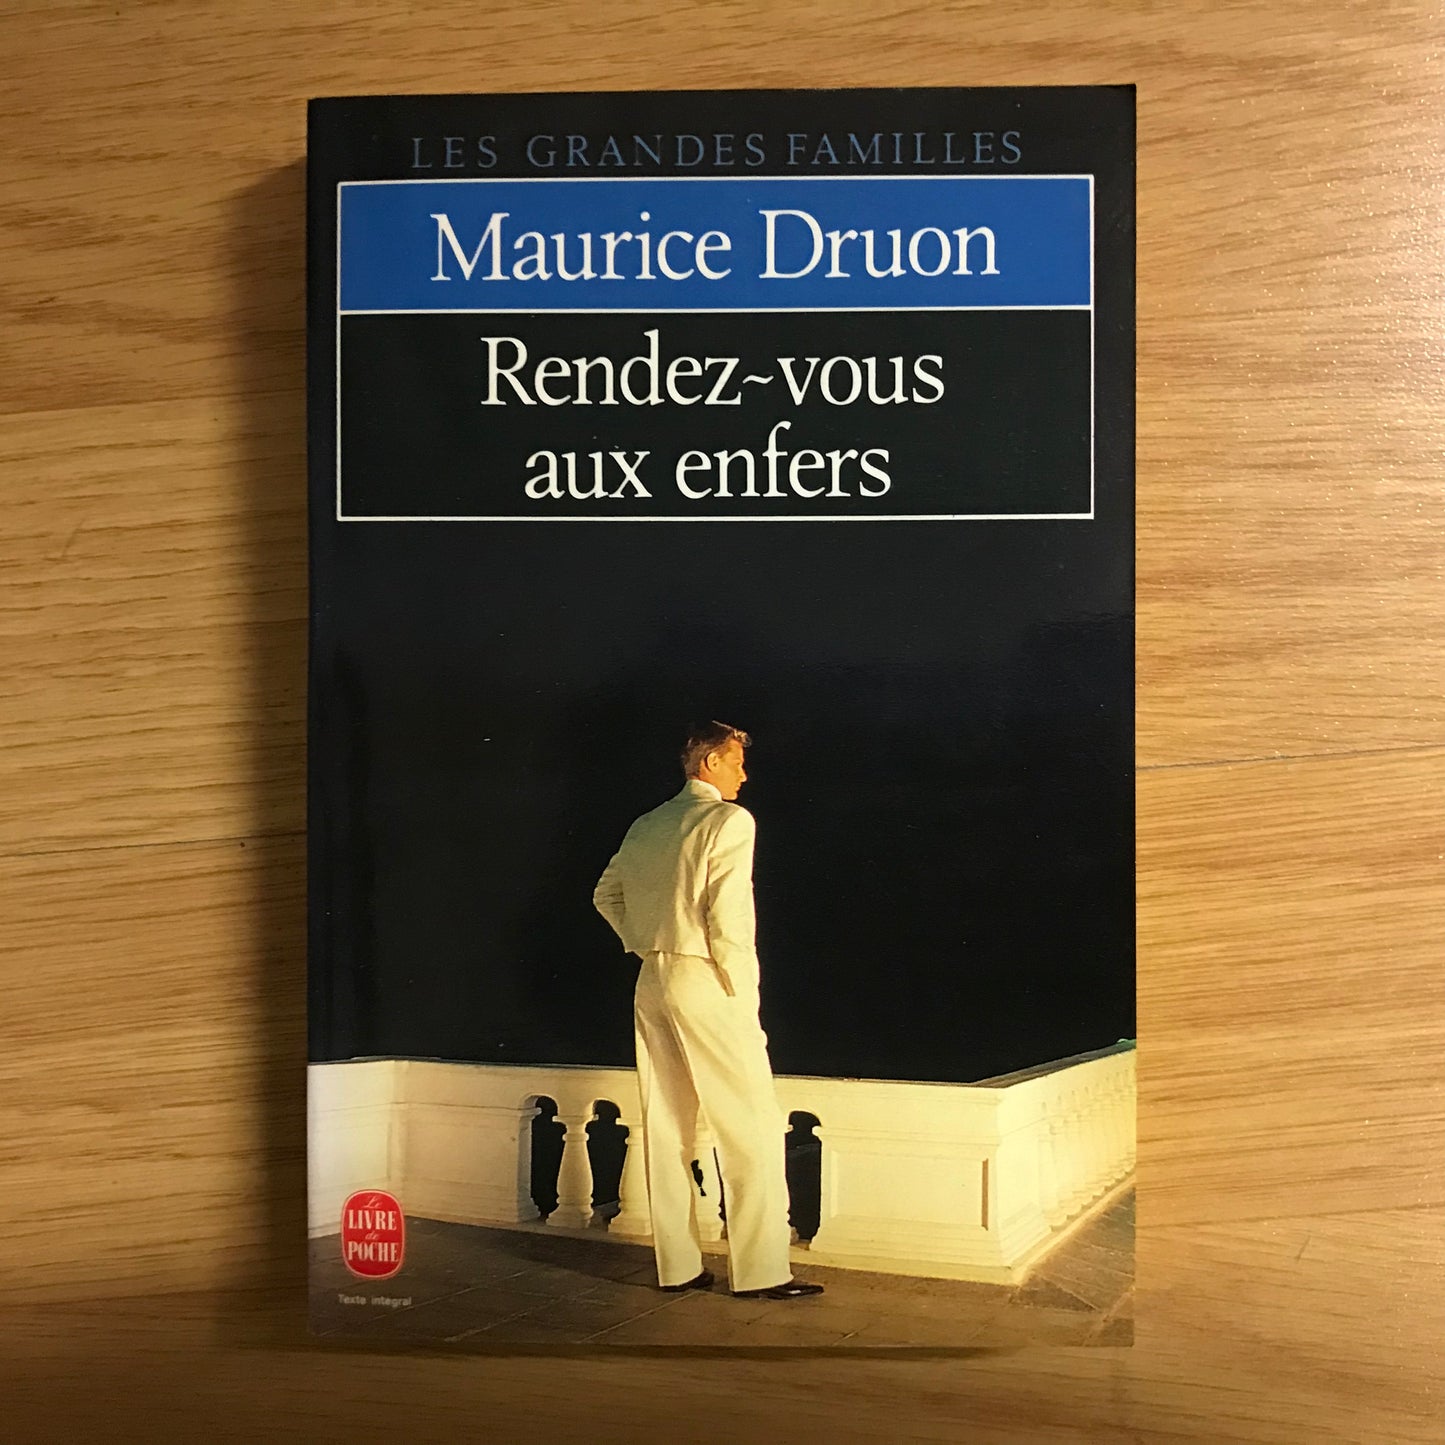 Druon, Maurice - Les grandes familles 3